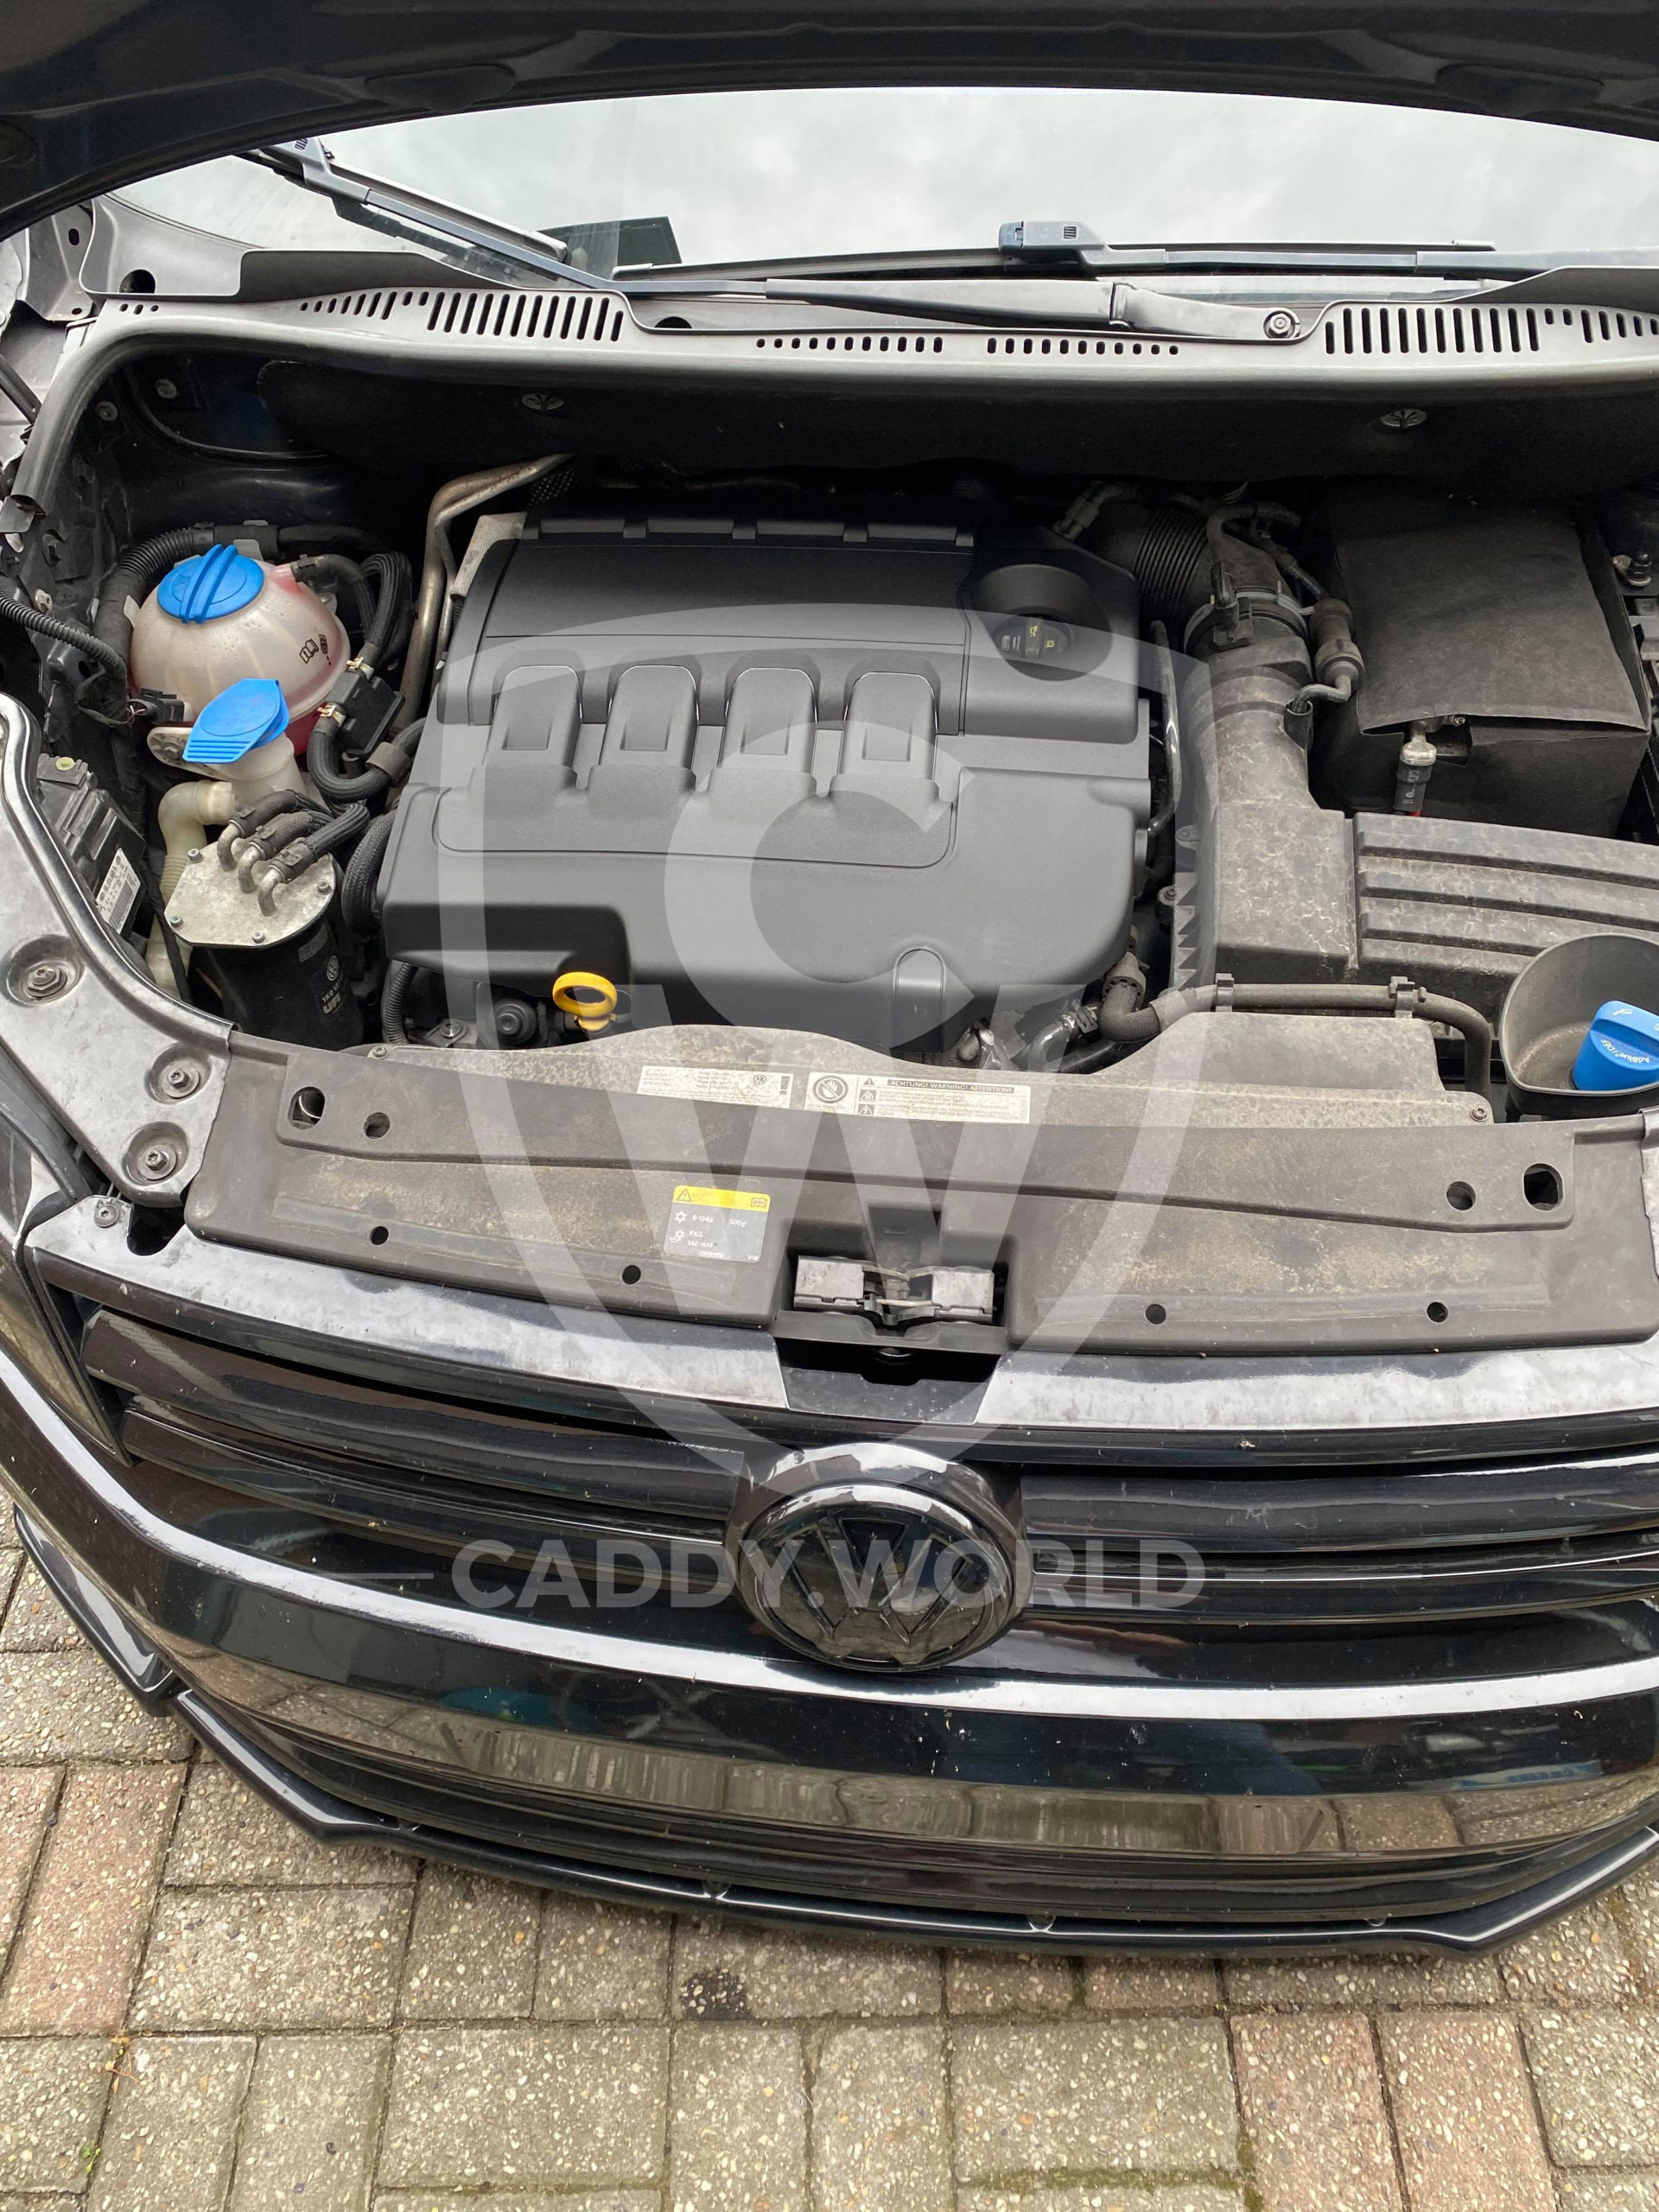 Eigendom uitgehongerd hangen VW engine cover VW Caddy mk4 2.0 TDI 75 / 102 hp euro6 - Caddy World